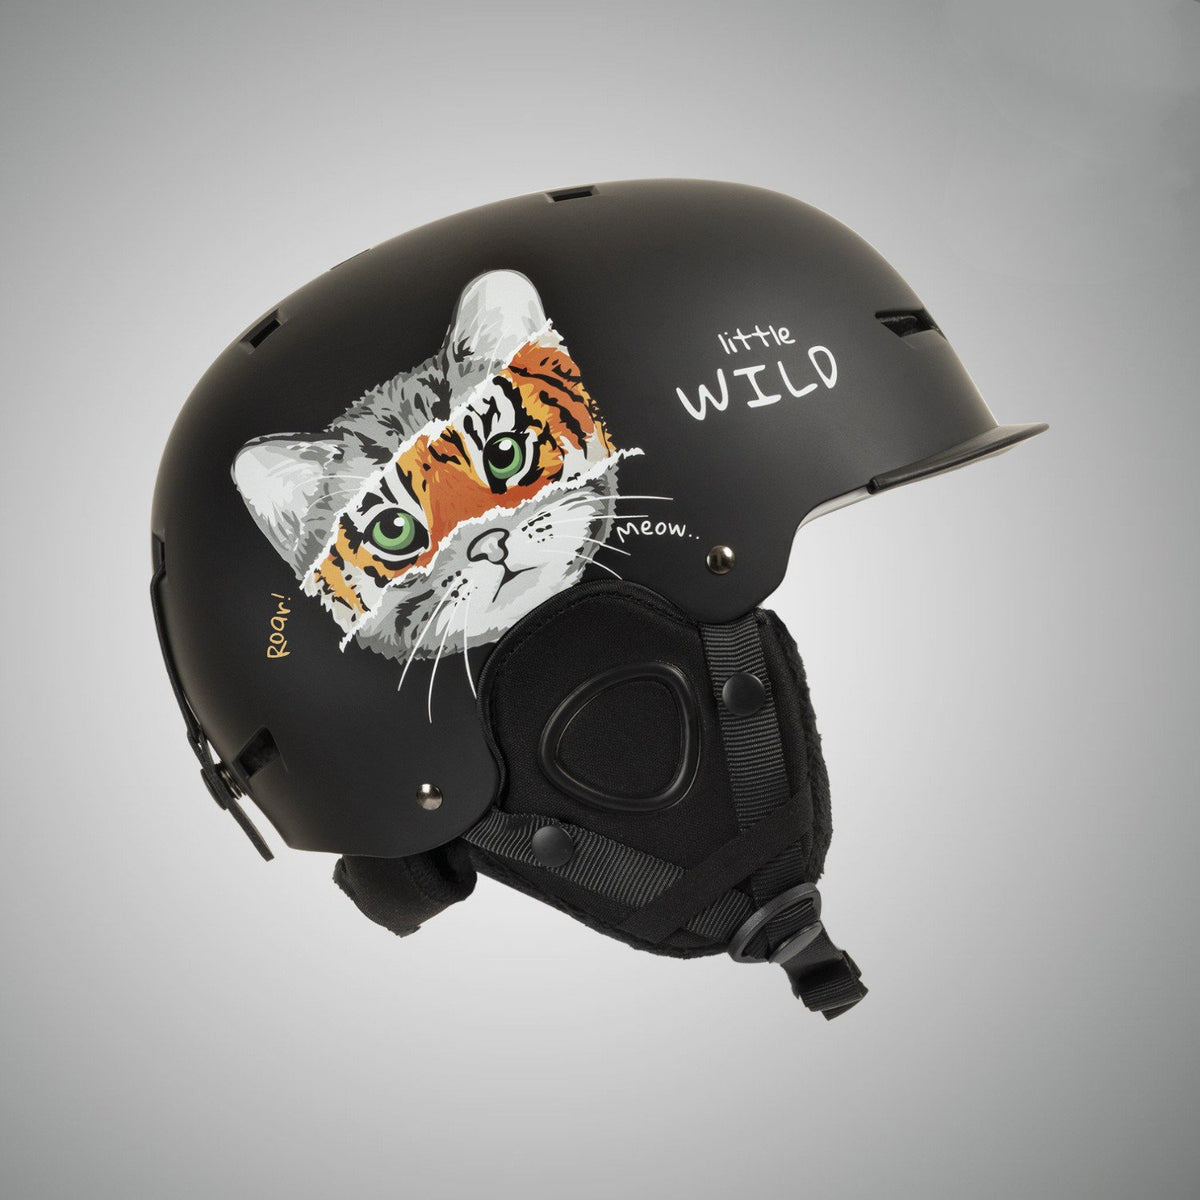 Ski Helmet - Snowboard Helmet for Men Women, Snow Helmet with 13 Vents, ABS Shell and EPS Foam, Safety Snow Sports Helmet